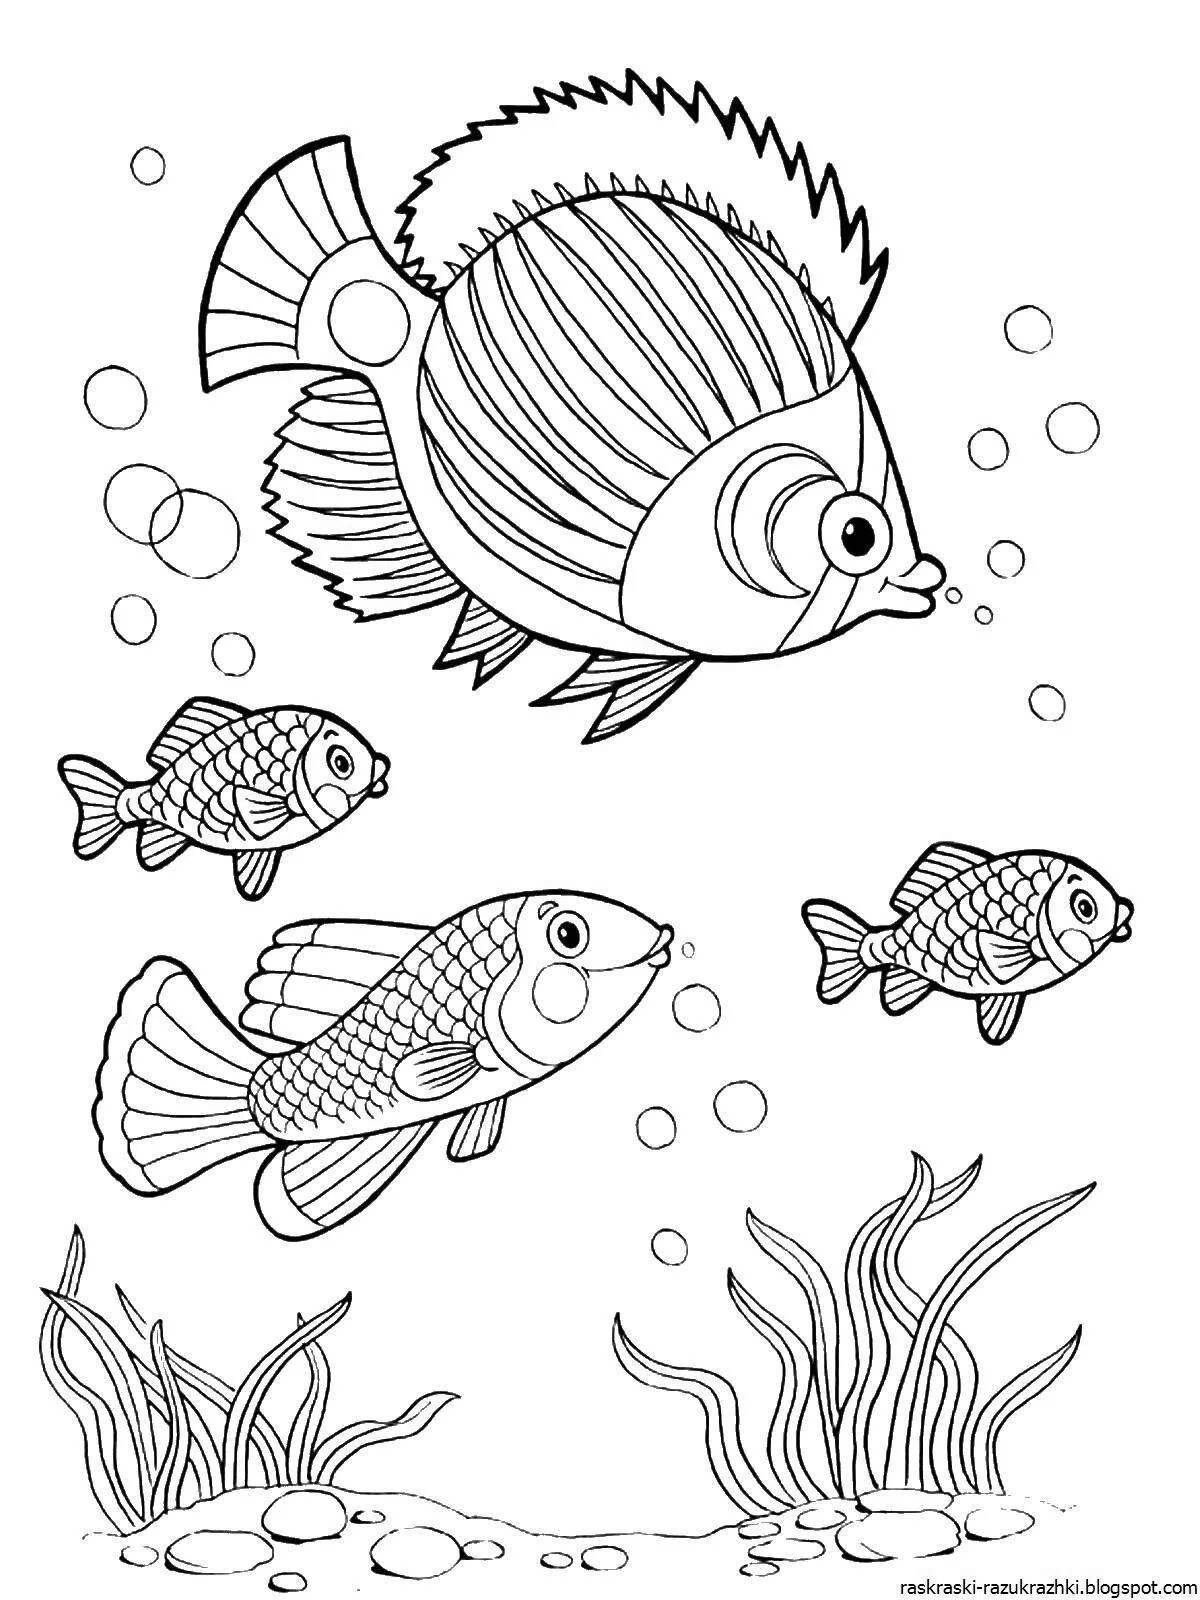 Wonderful aquarium fish coloring book